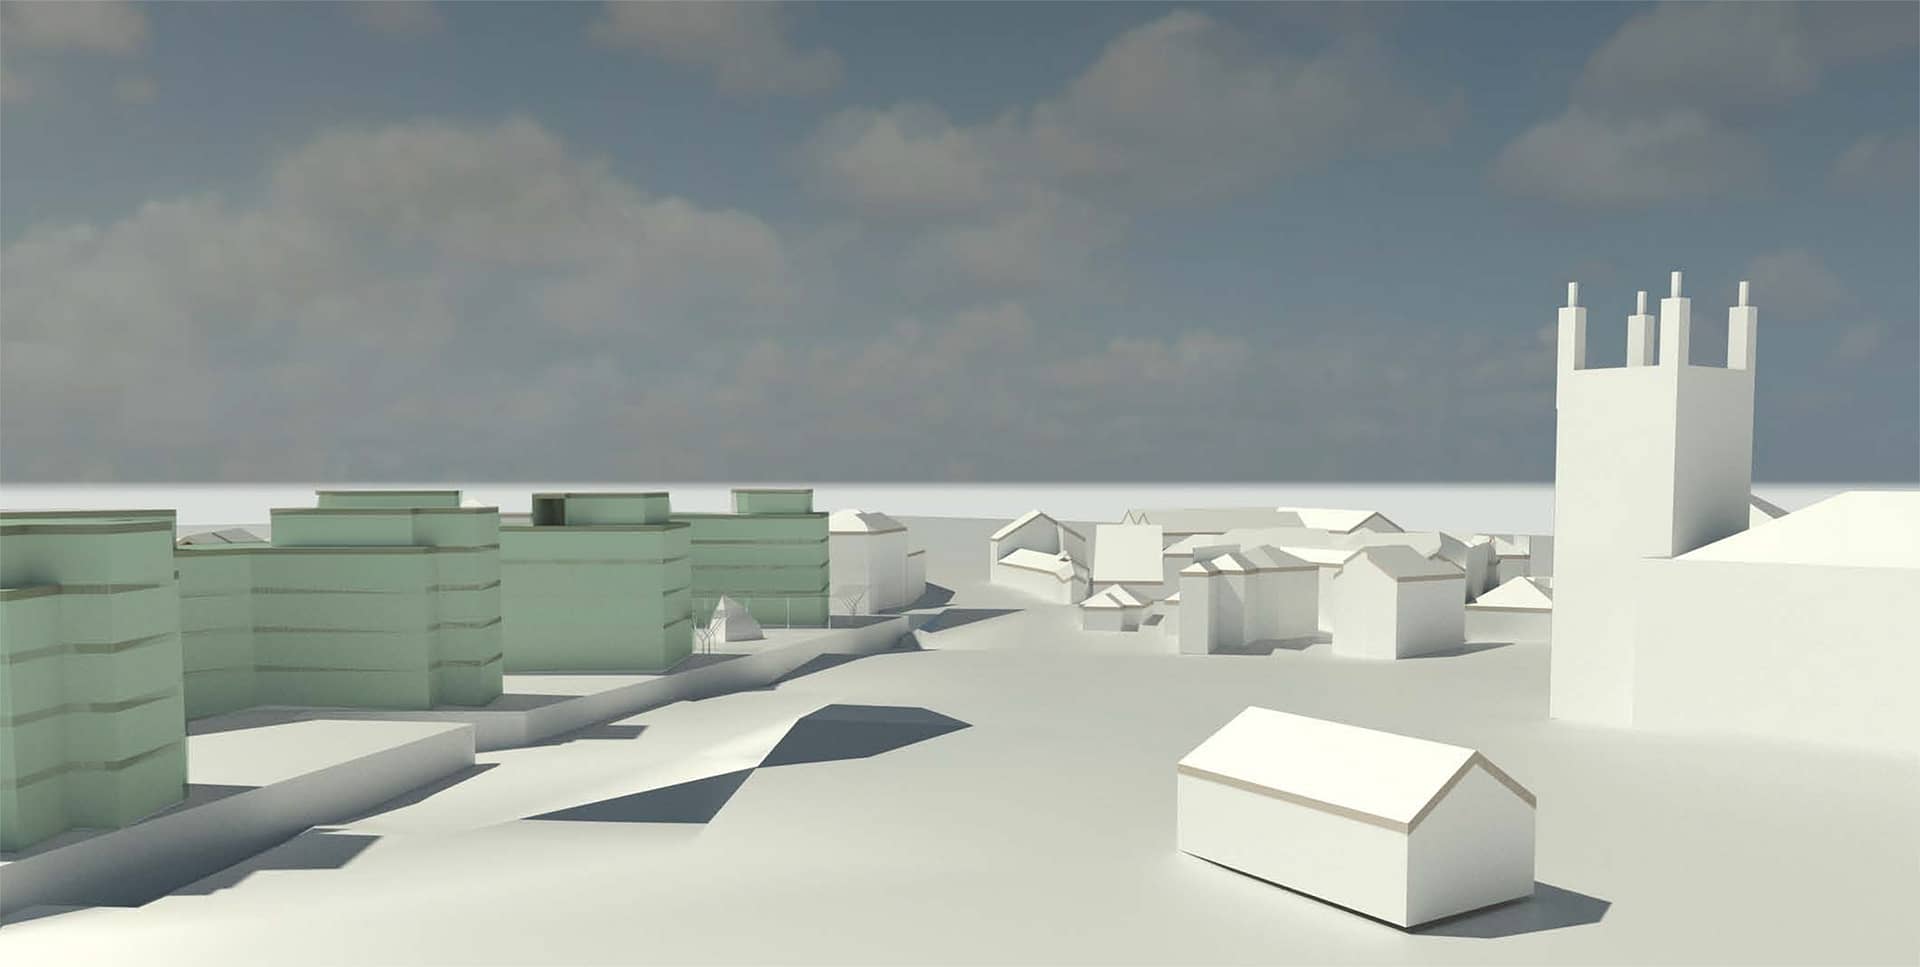 Proposed Mixed-Use Development, Wrexham CGI3